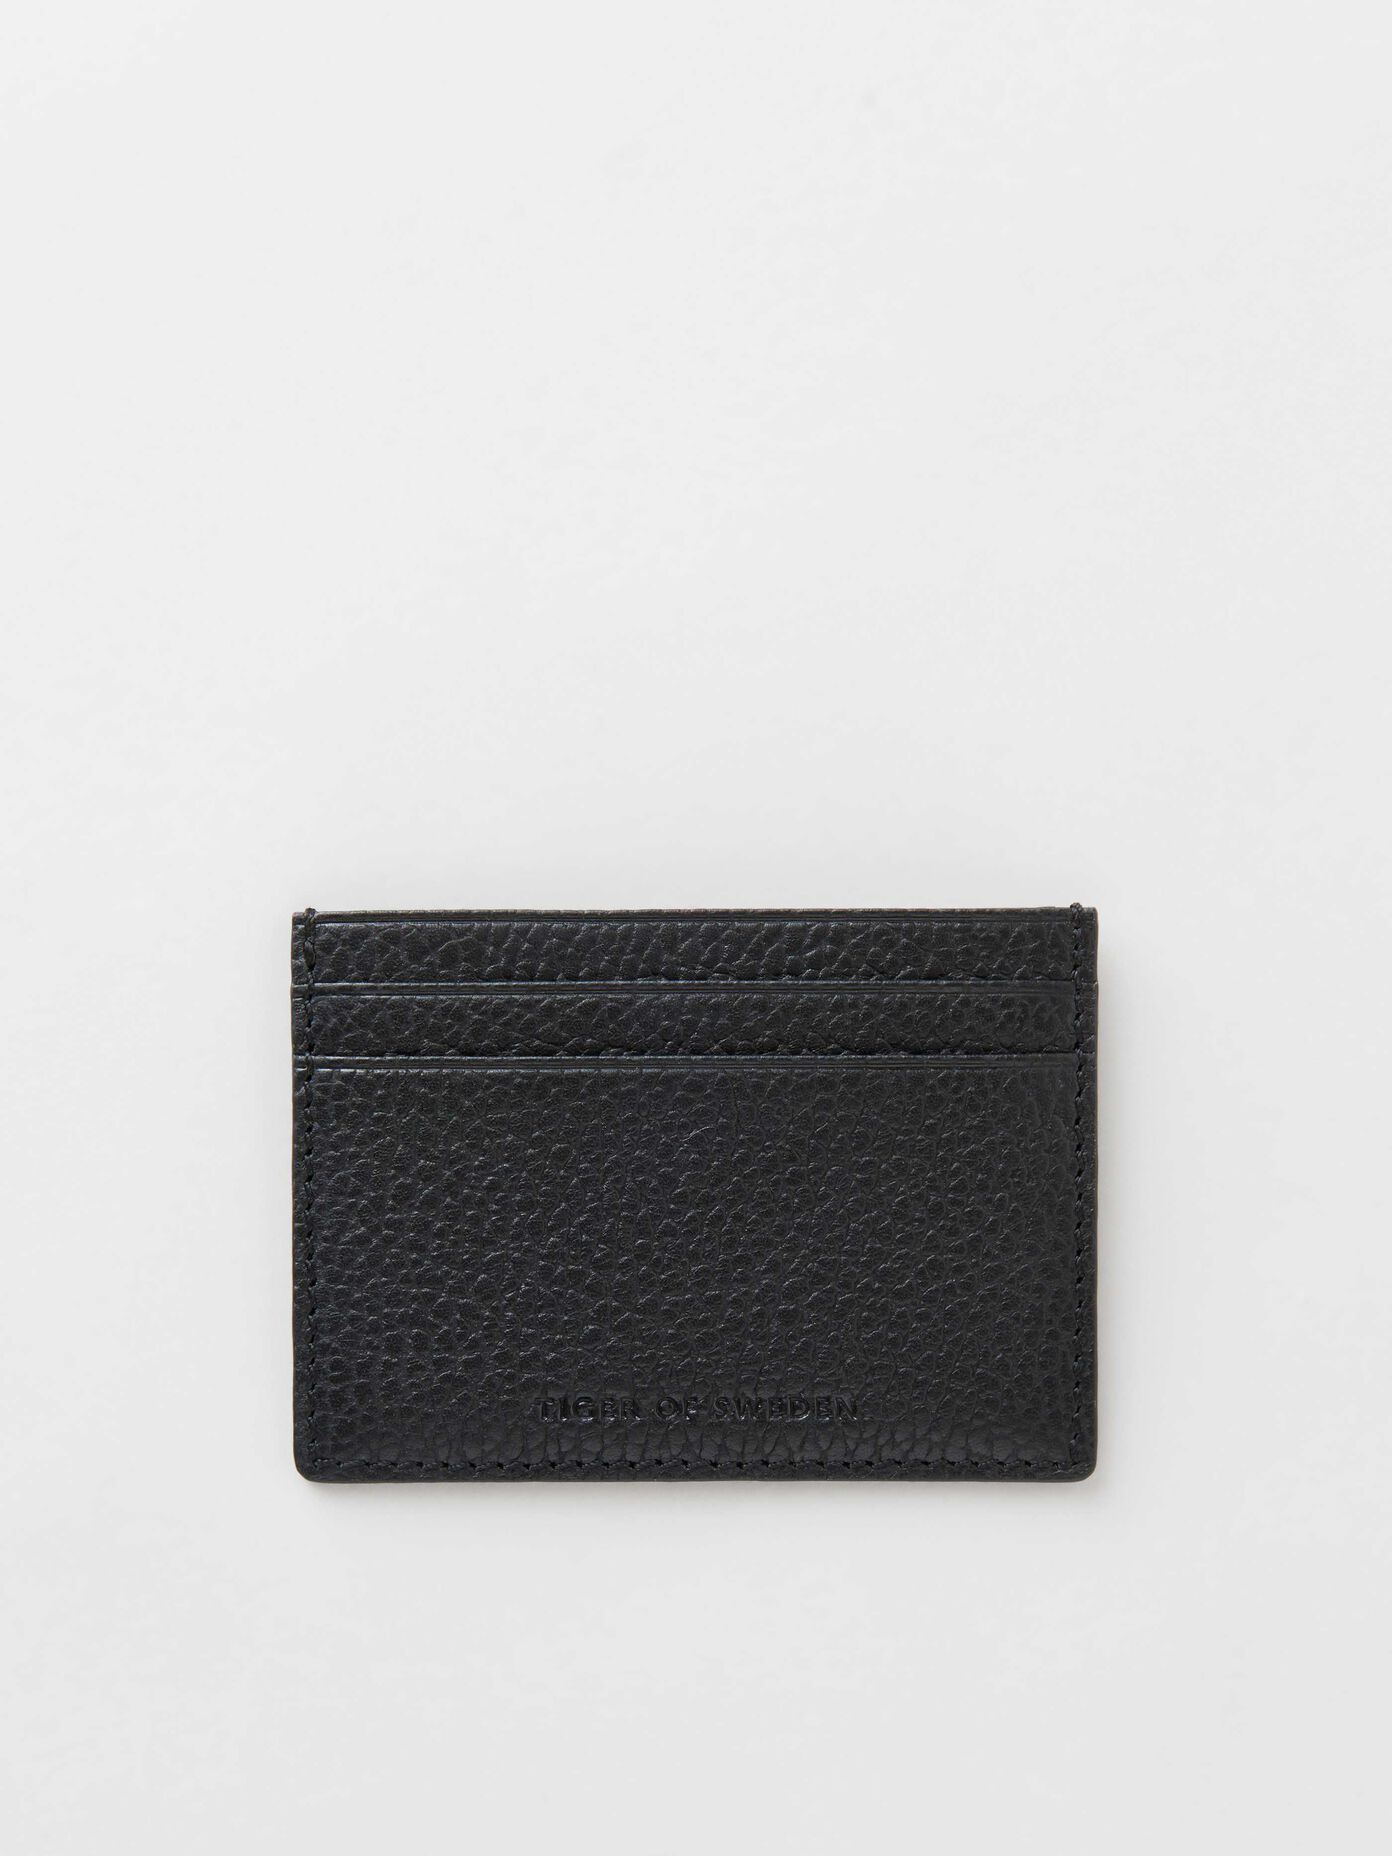 Wallets - Buy leather wallets online at Tiger of Sweden